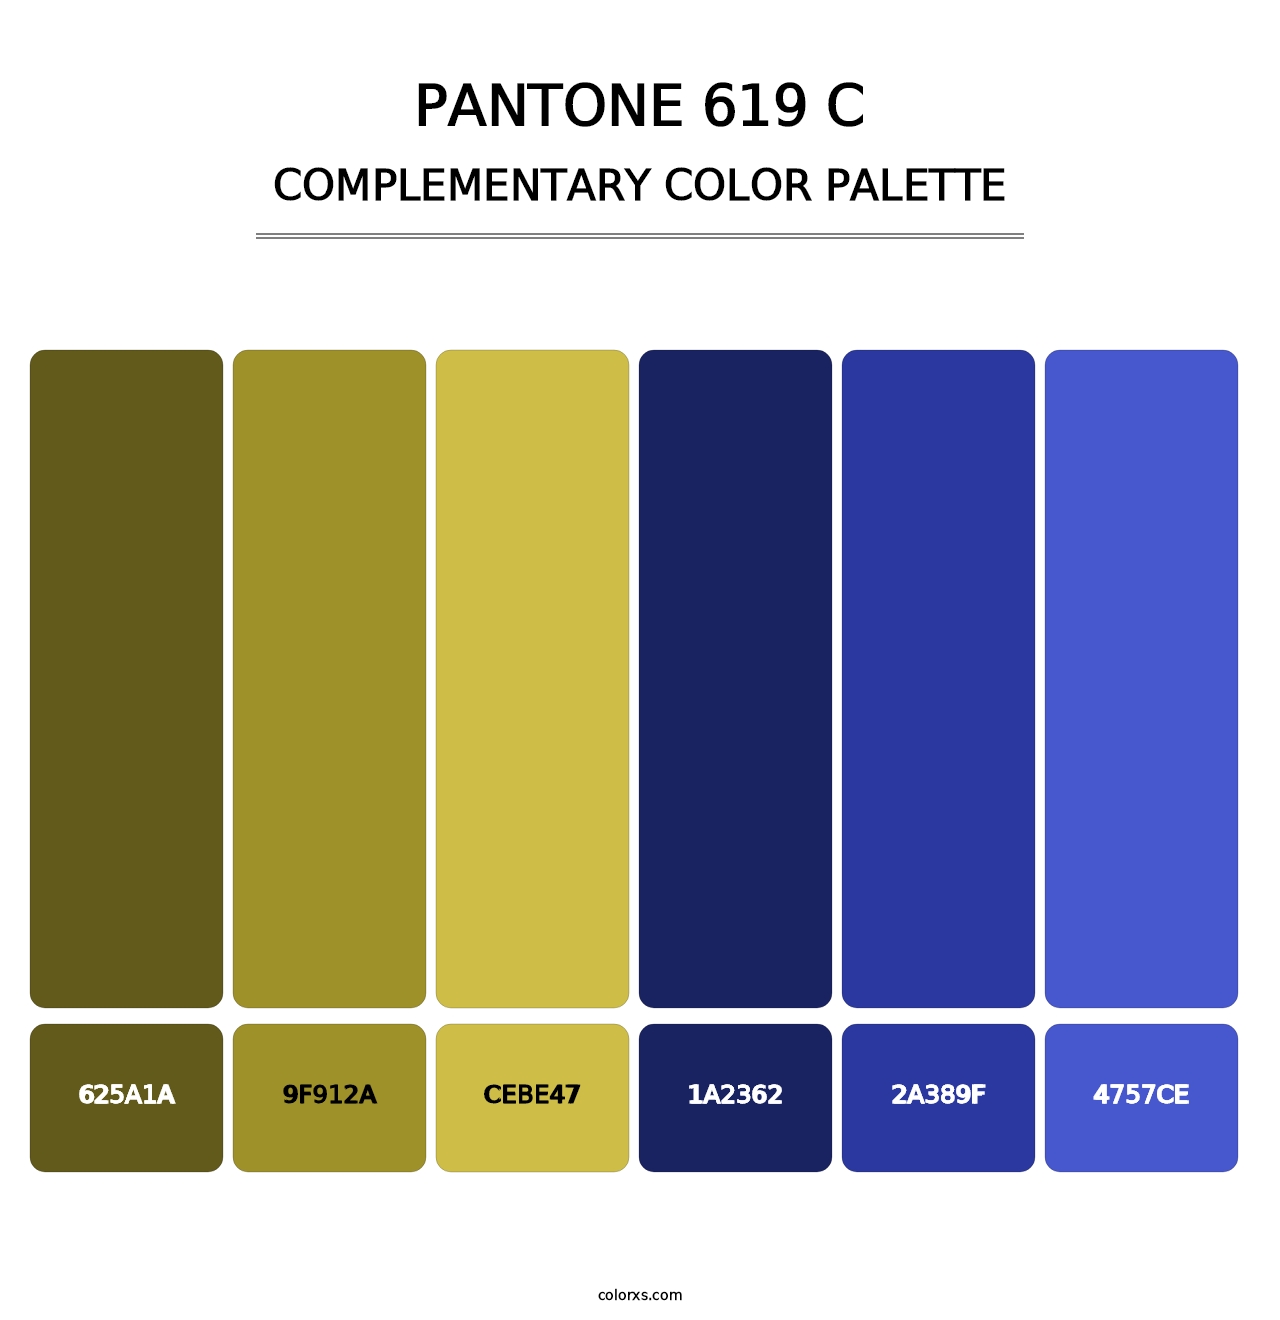 PANTONE 619 C - Complementary Color Palette